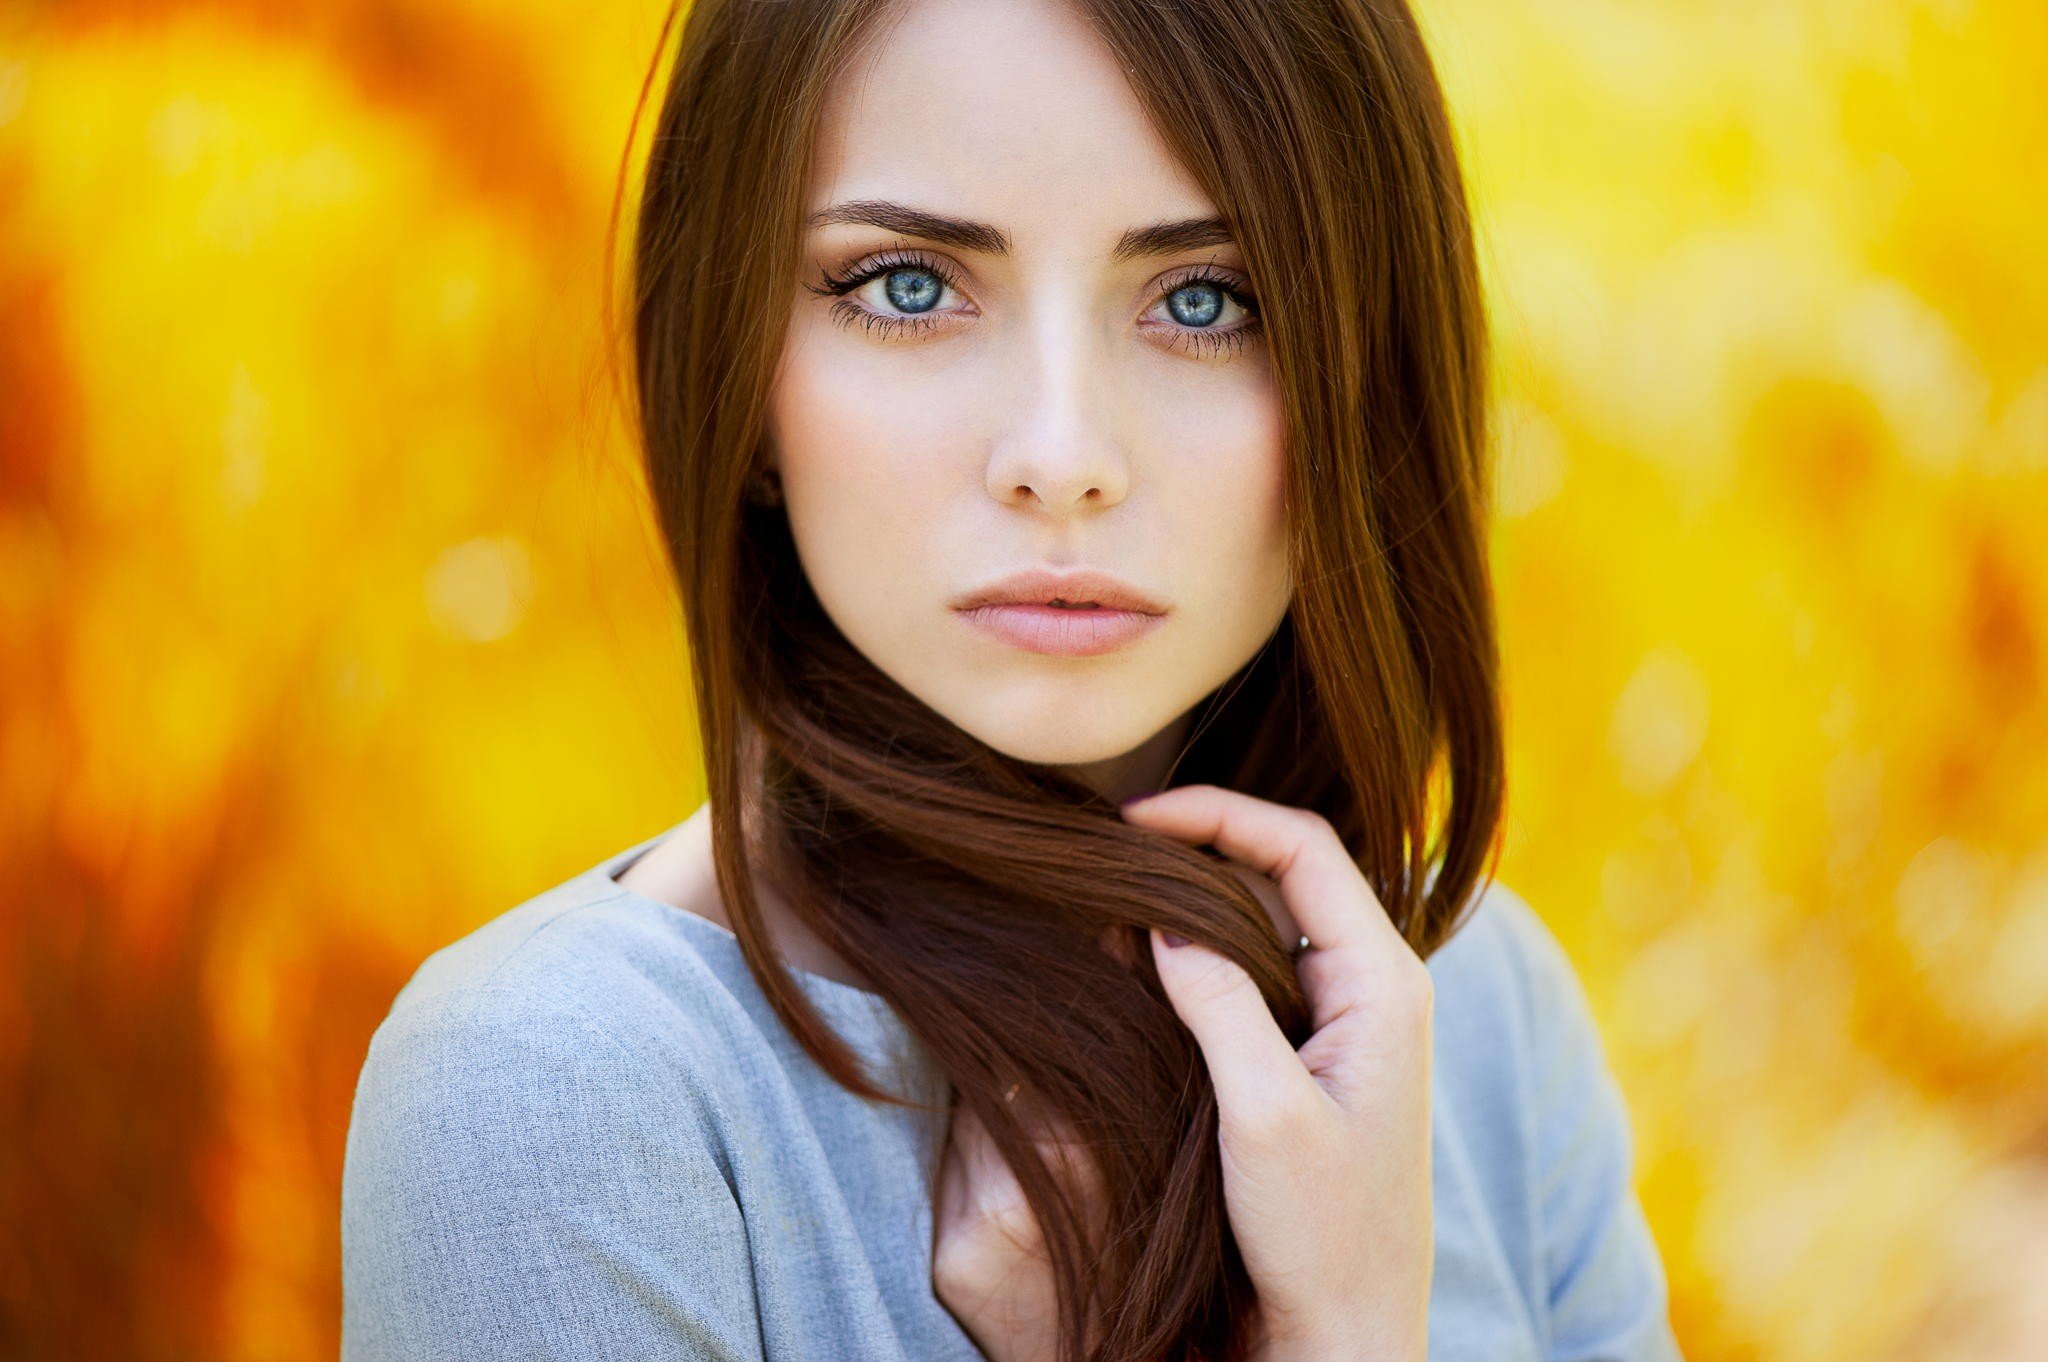 Women Auburn Hair Blue Eyes Face Blurred Long Hair Looking At